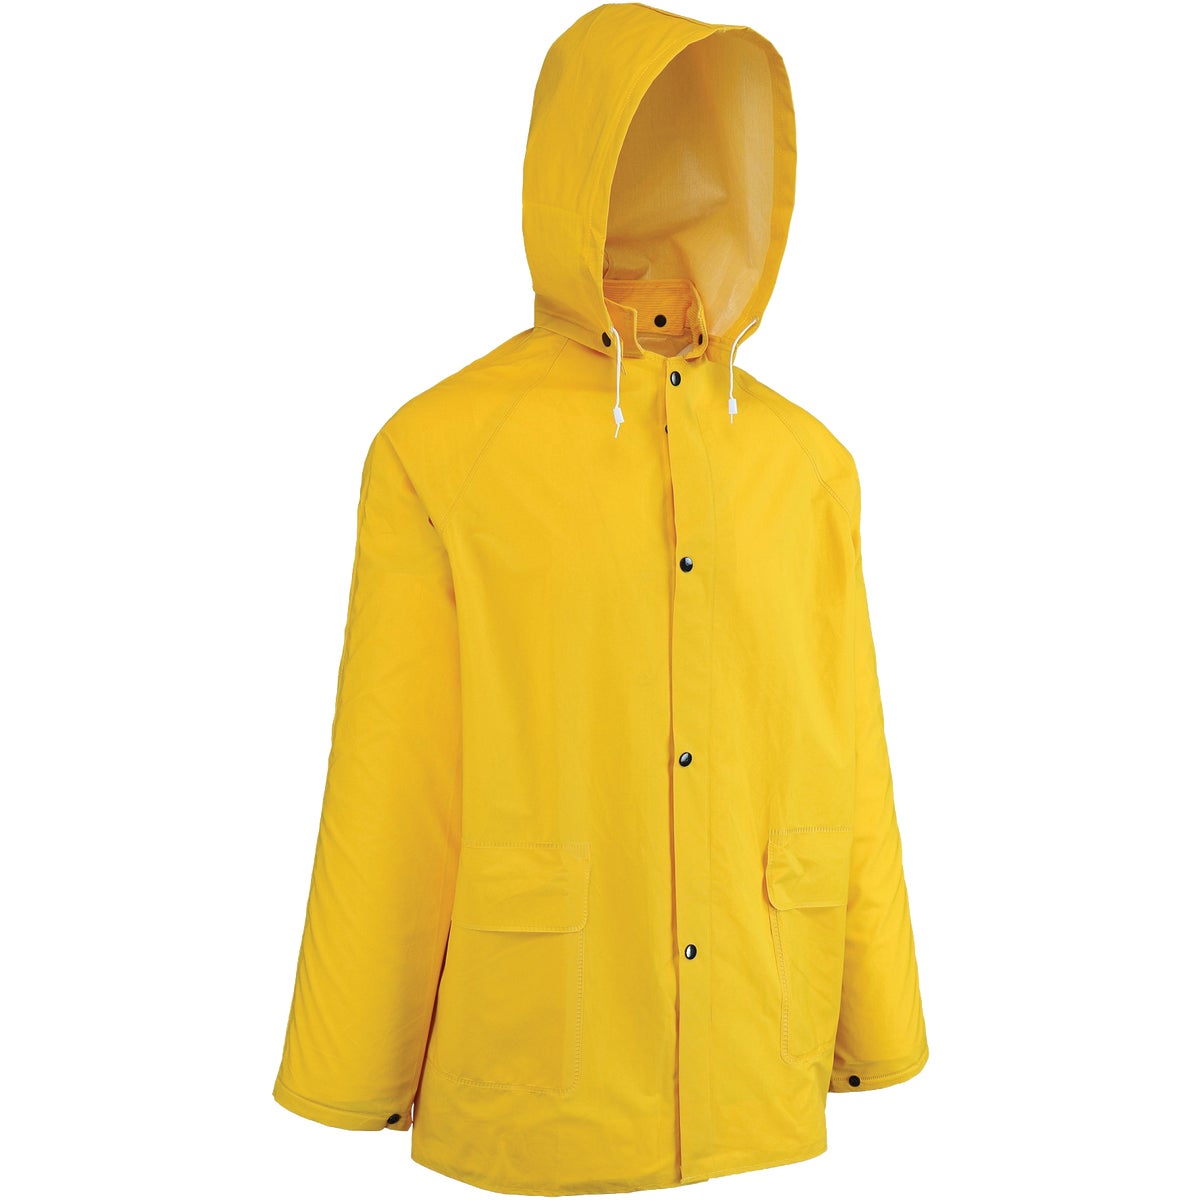 West Chester Protective Gear 2XL Yellow PVC Rain Coat